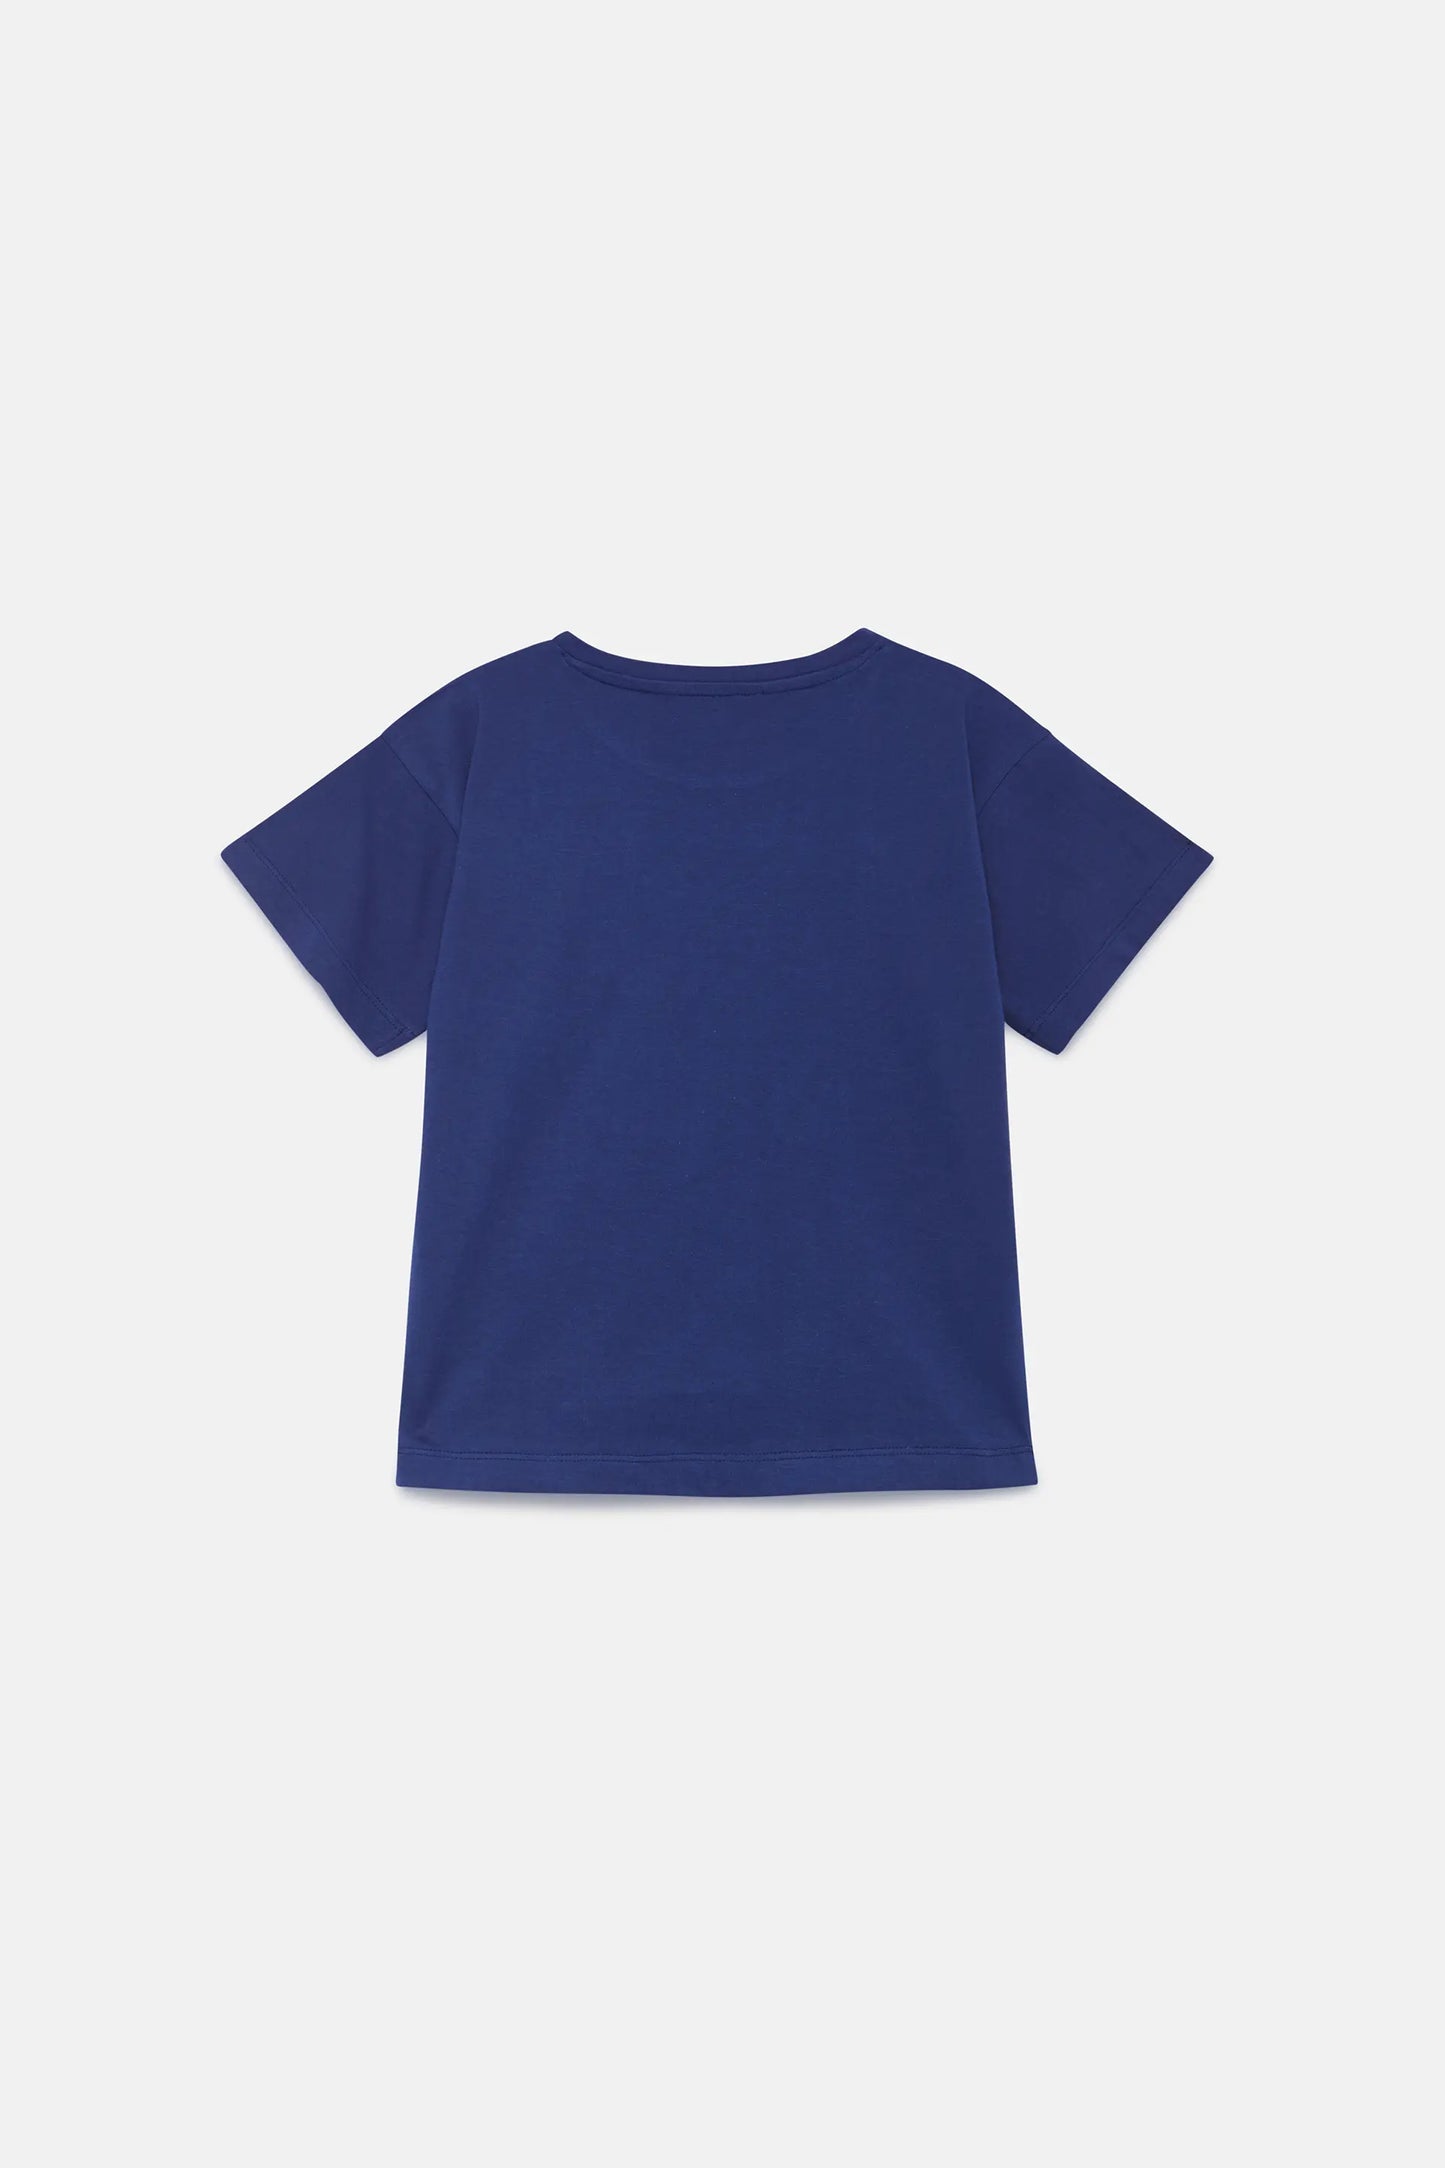 Camiseta unisex Stars azul